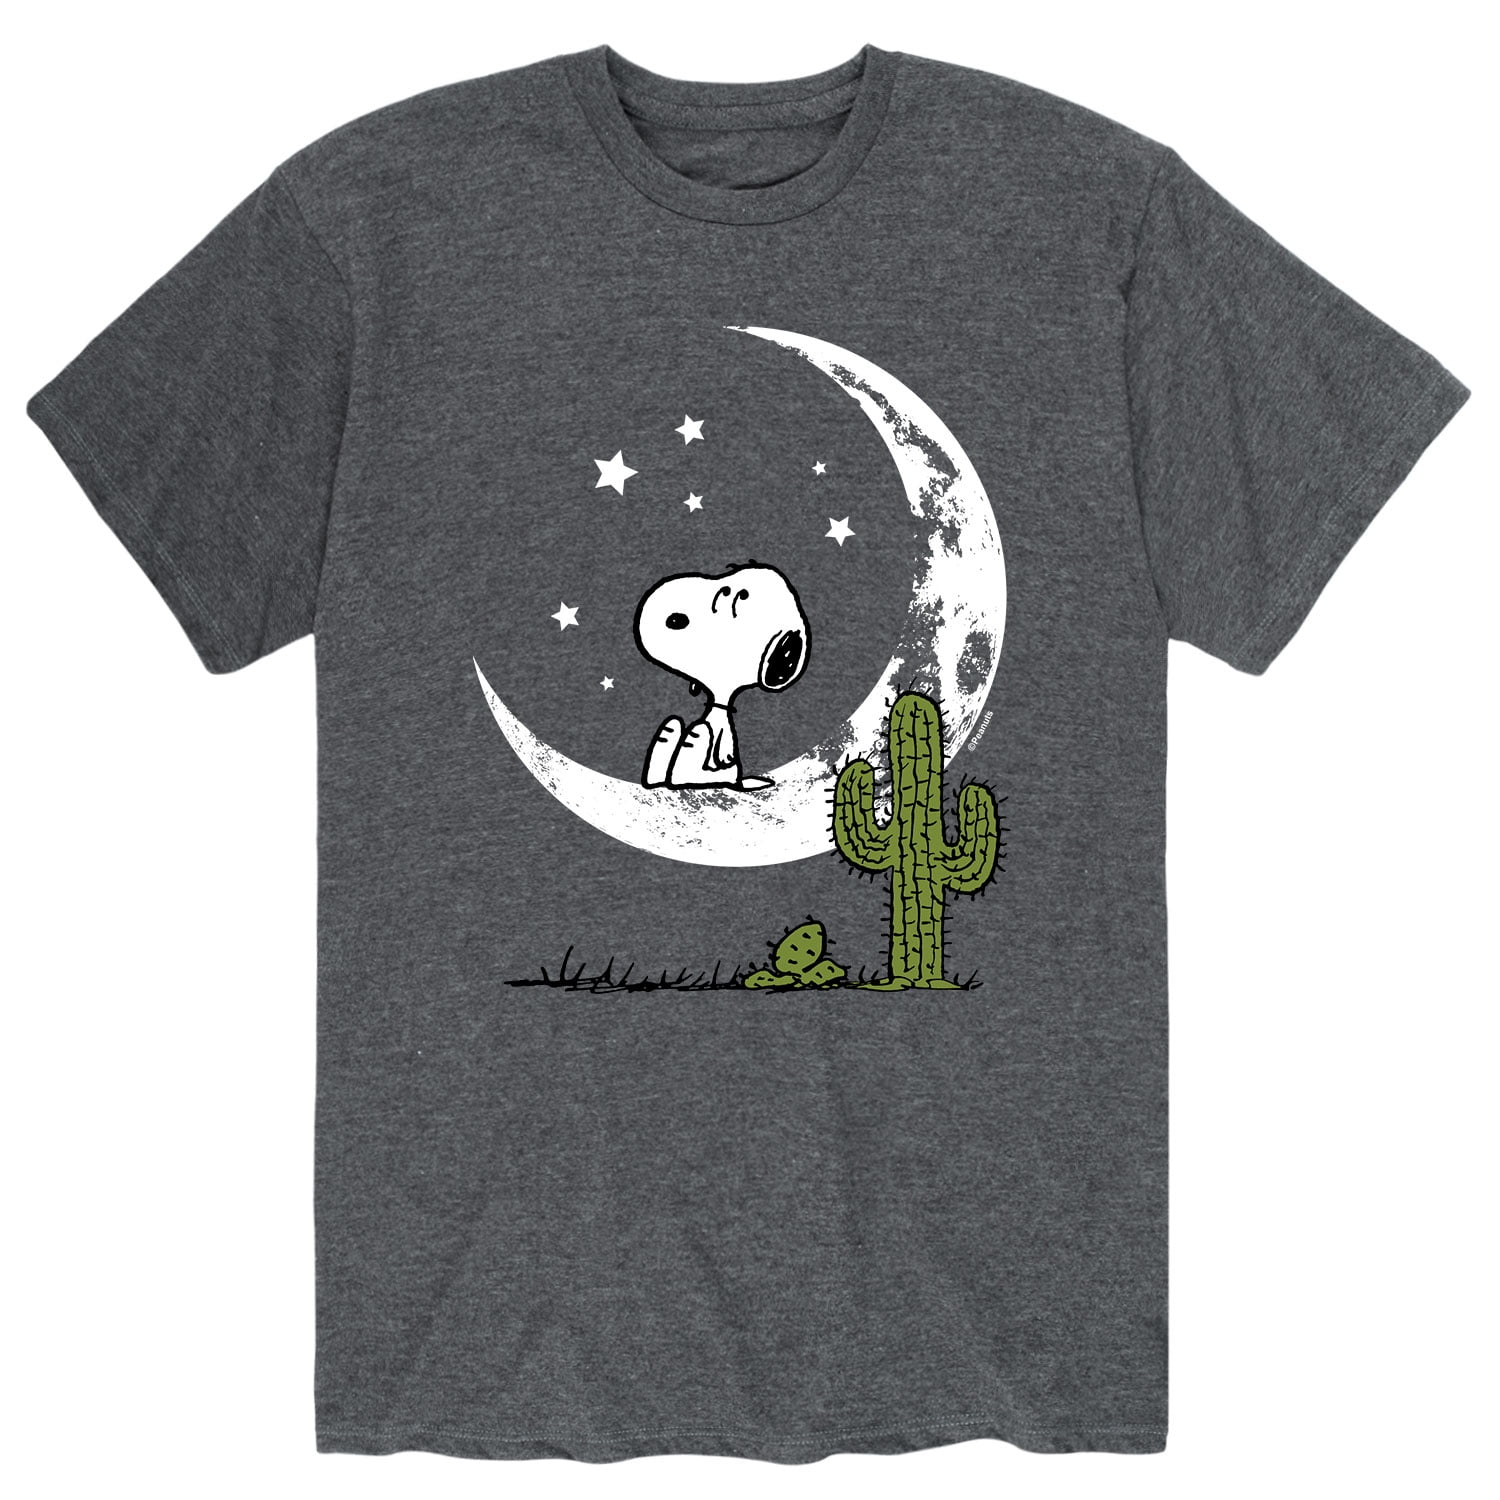 Peanuts - Snoopy Desert On Moon - Men's Short Sleeve Graphic T-Shirt ...